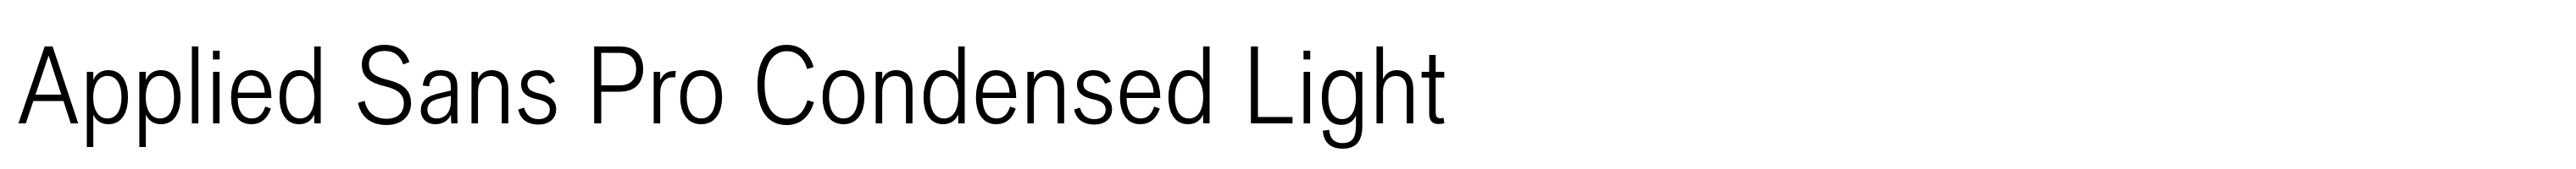 Applied Sans Pro Condensed Light